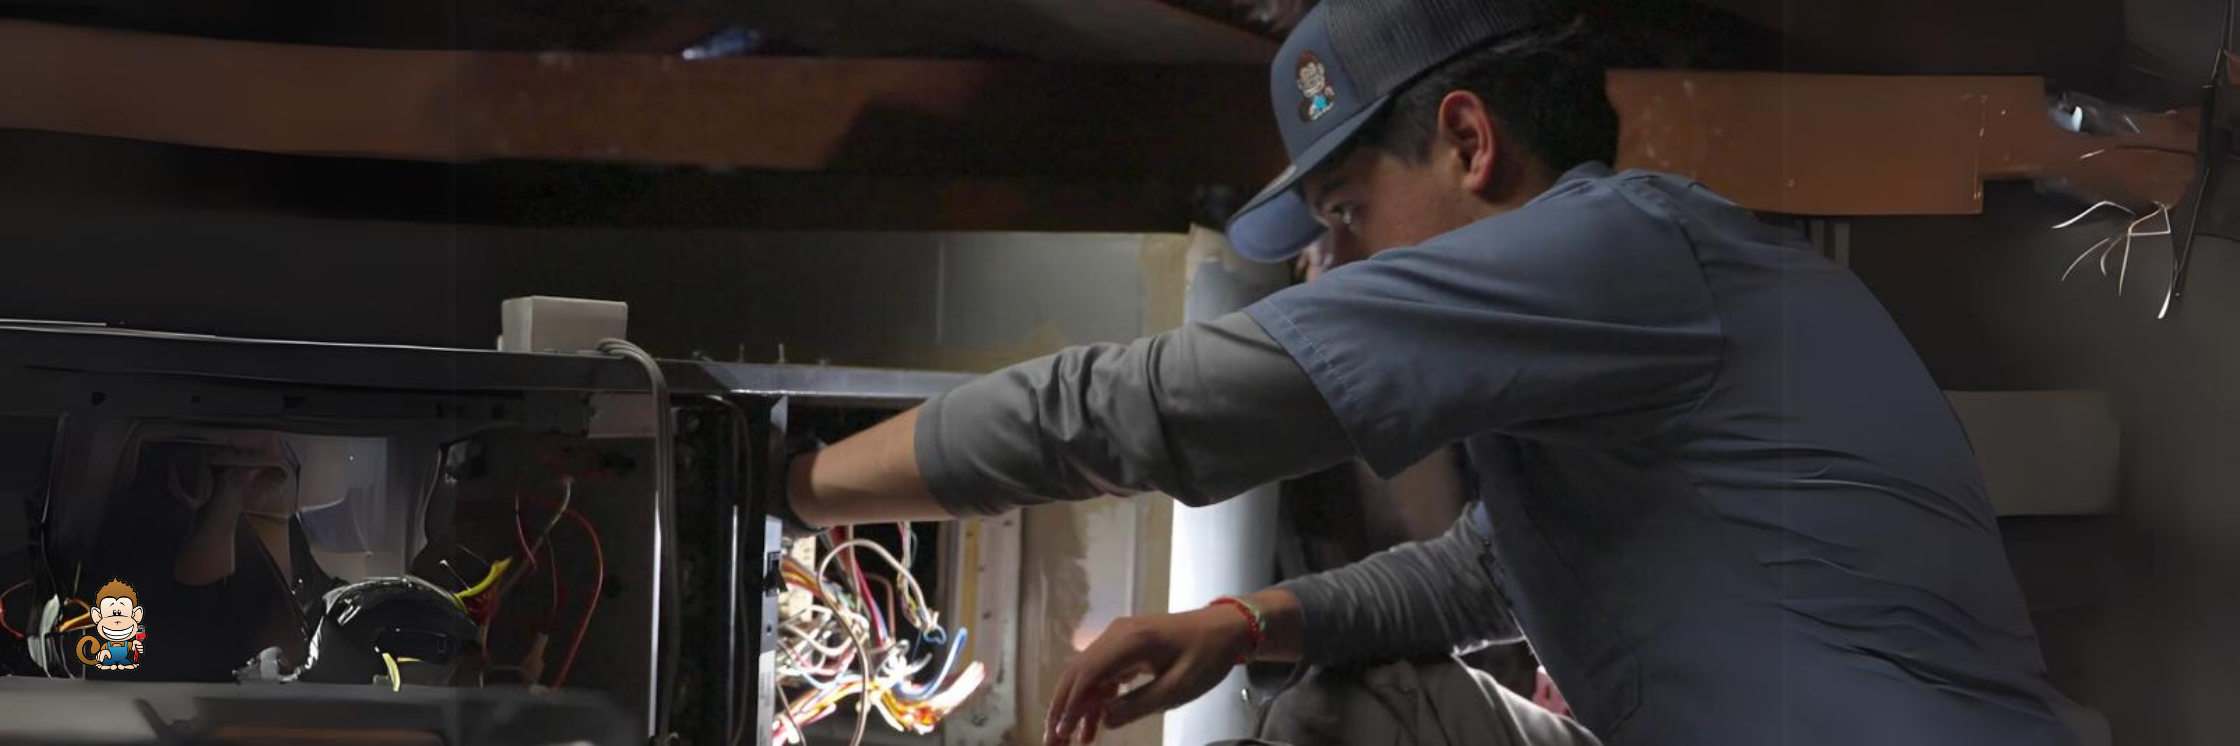 AC Maintenance in Los Angeles: DIY vs. Hiring a Professional (Video)